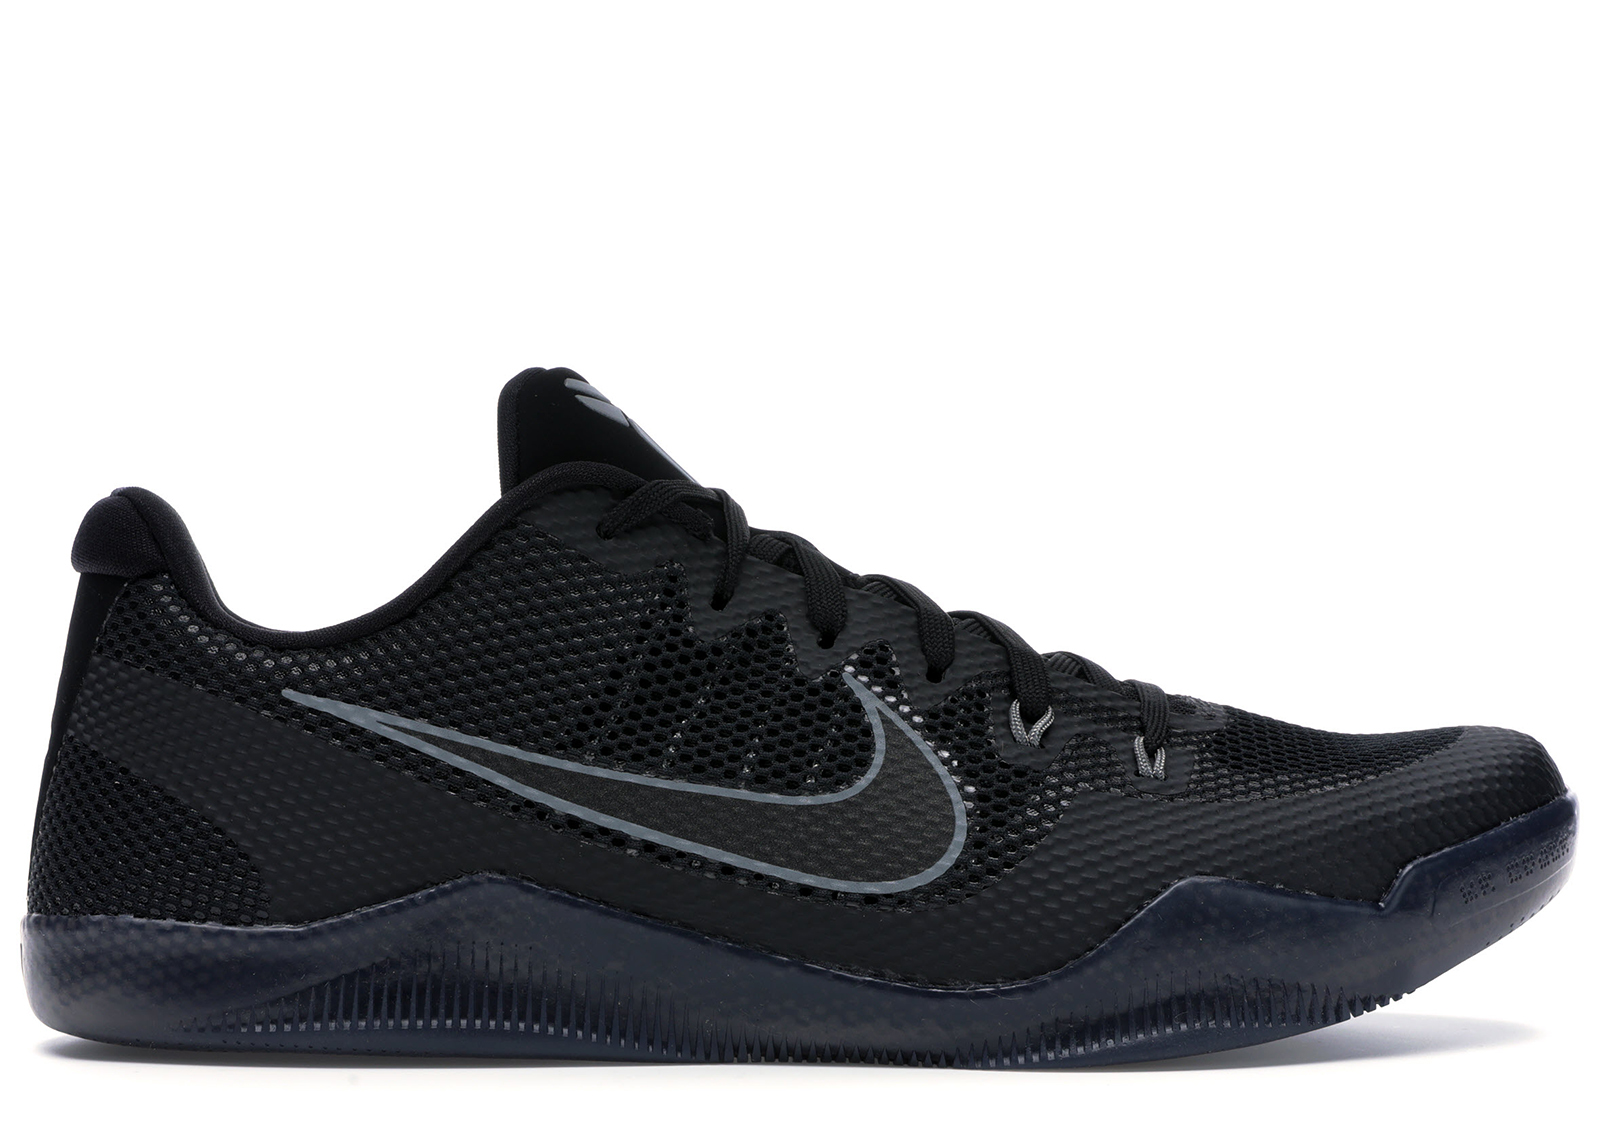 Nike Kobe 11 EM Low Black Cool Grey メンズ - 836183-001 - JP